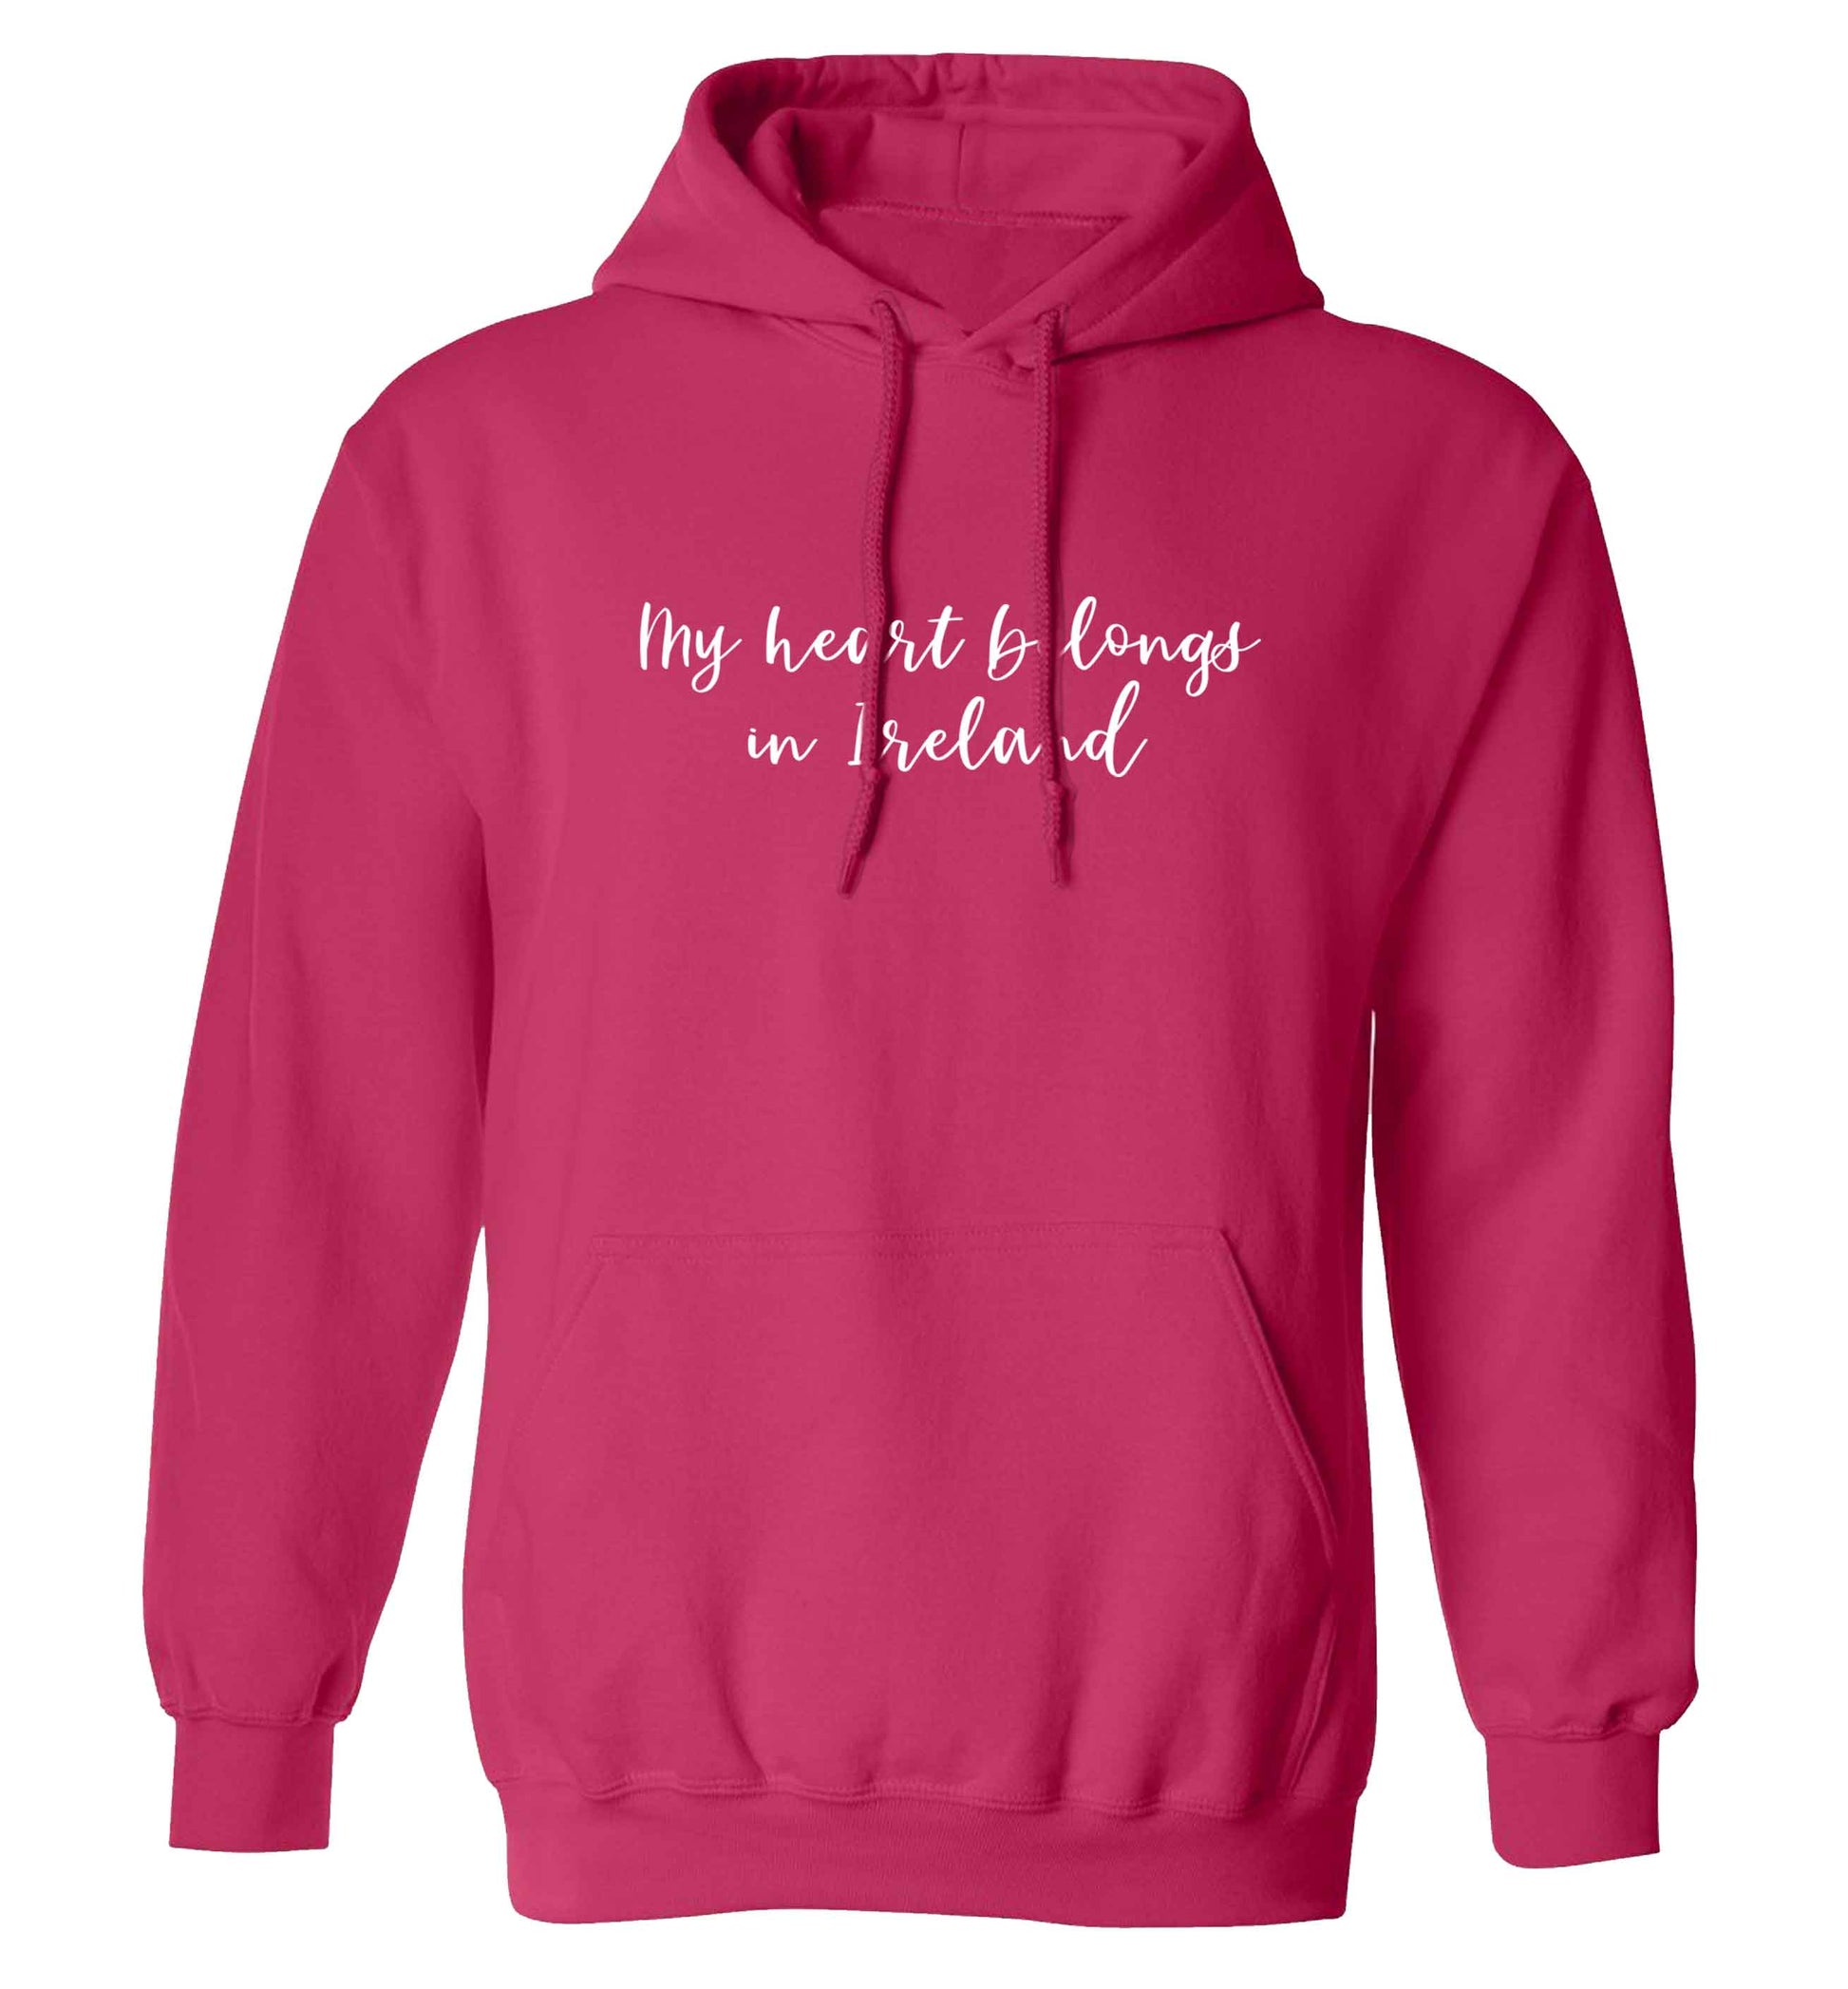 My heart belongs in Ireland adults unisex pink hoodie 2XL